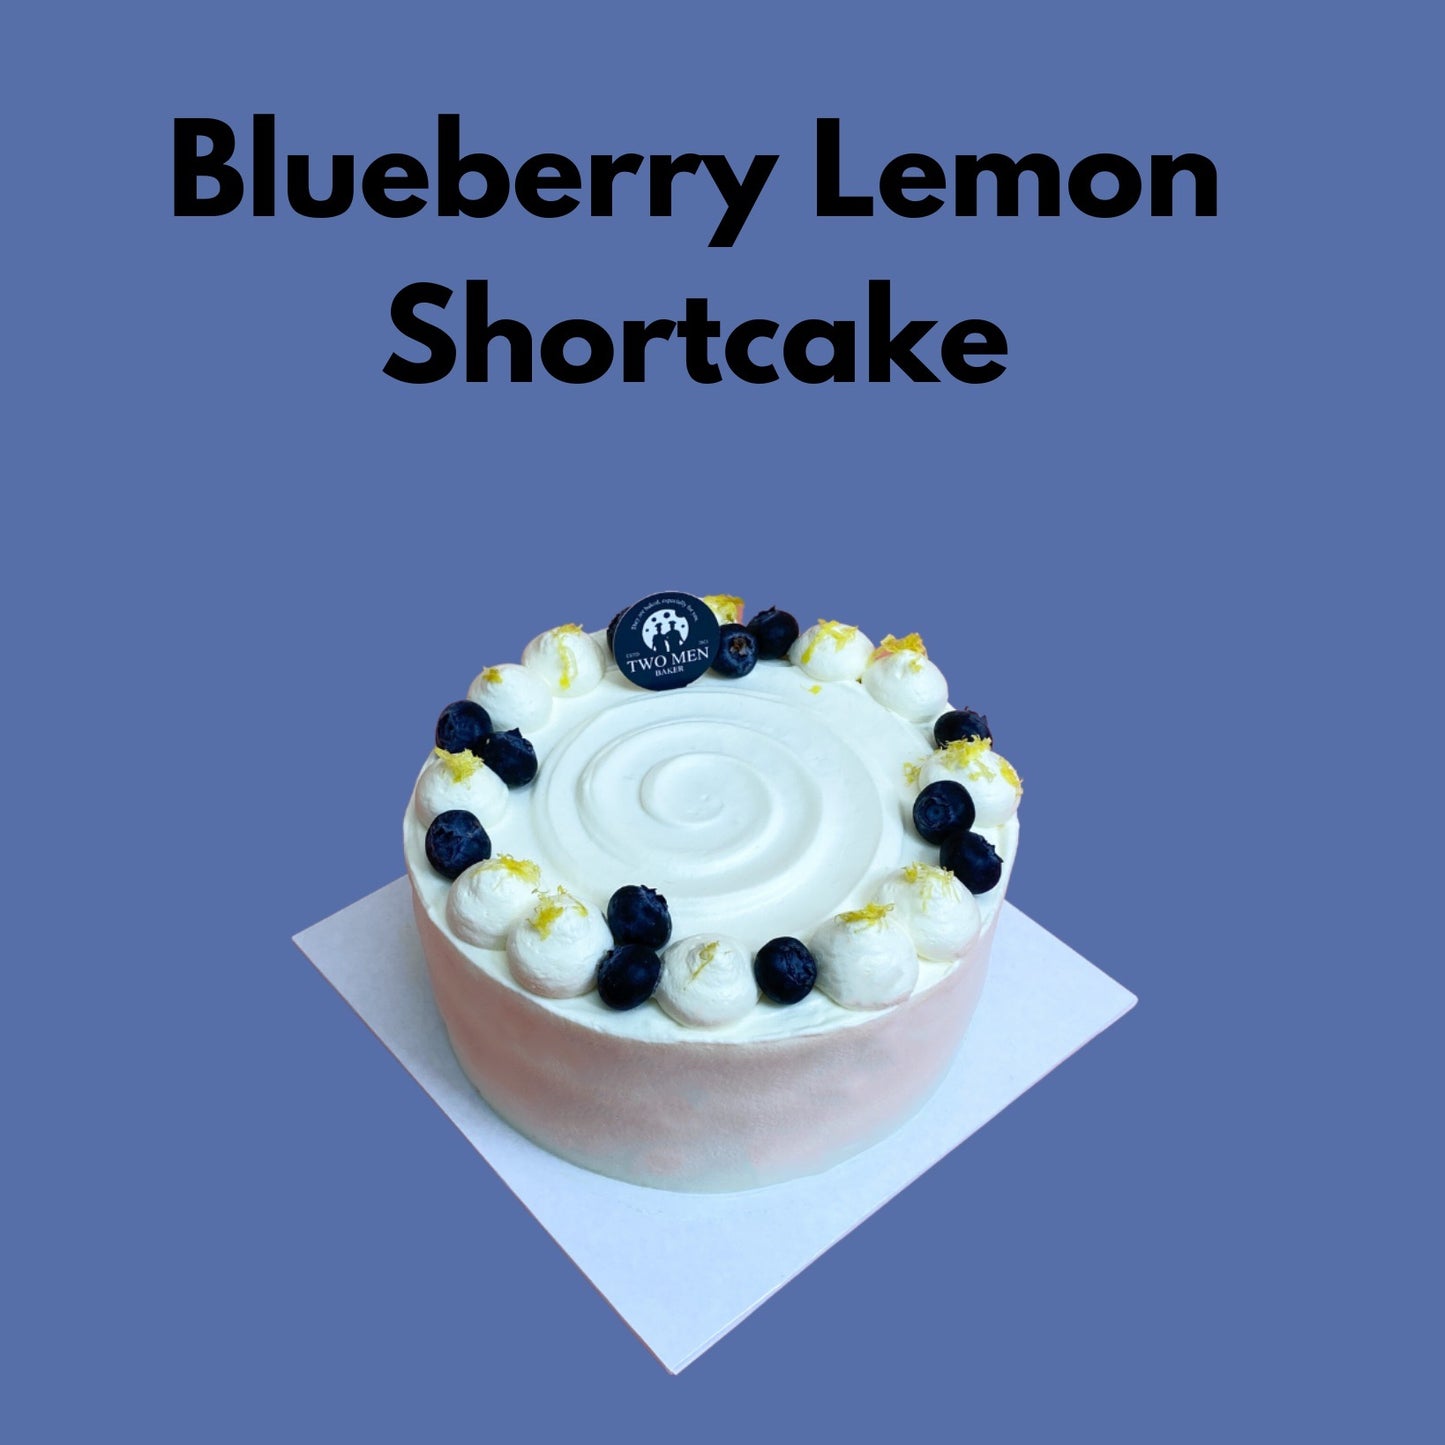 Blueberry Lemon Shortcake | Same-Day Delivery Cake